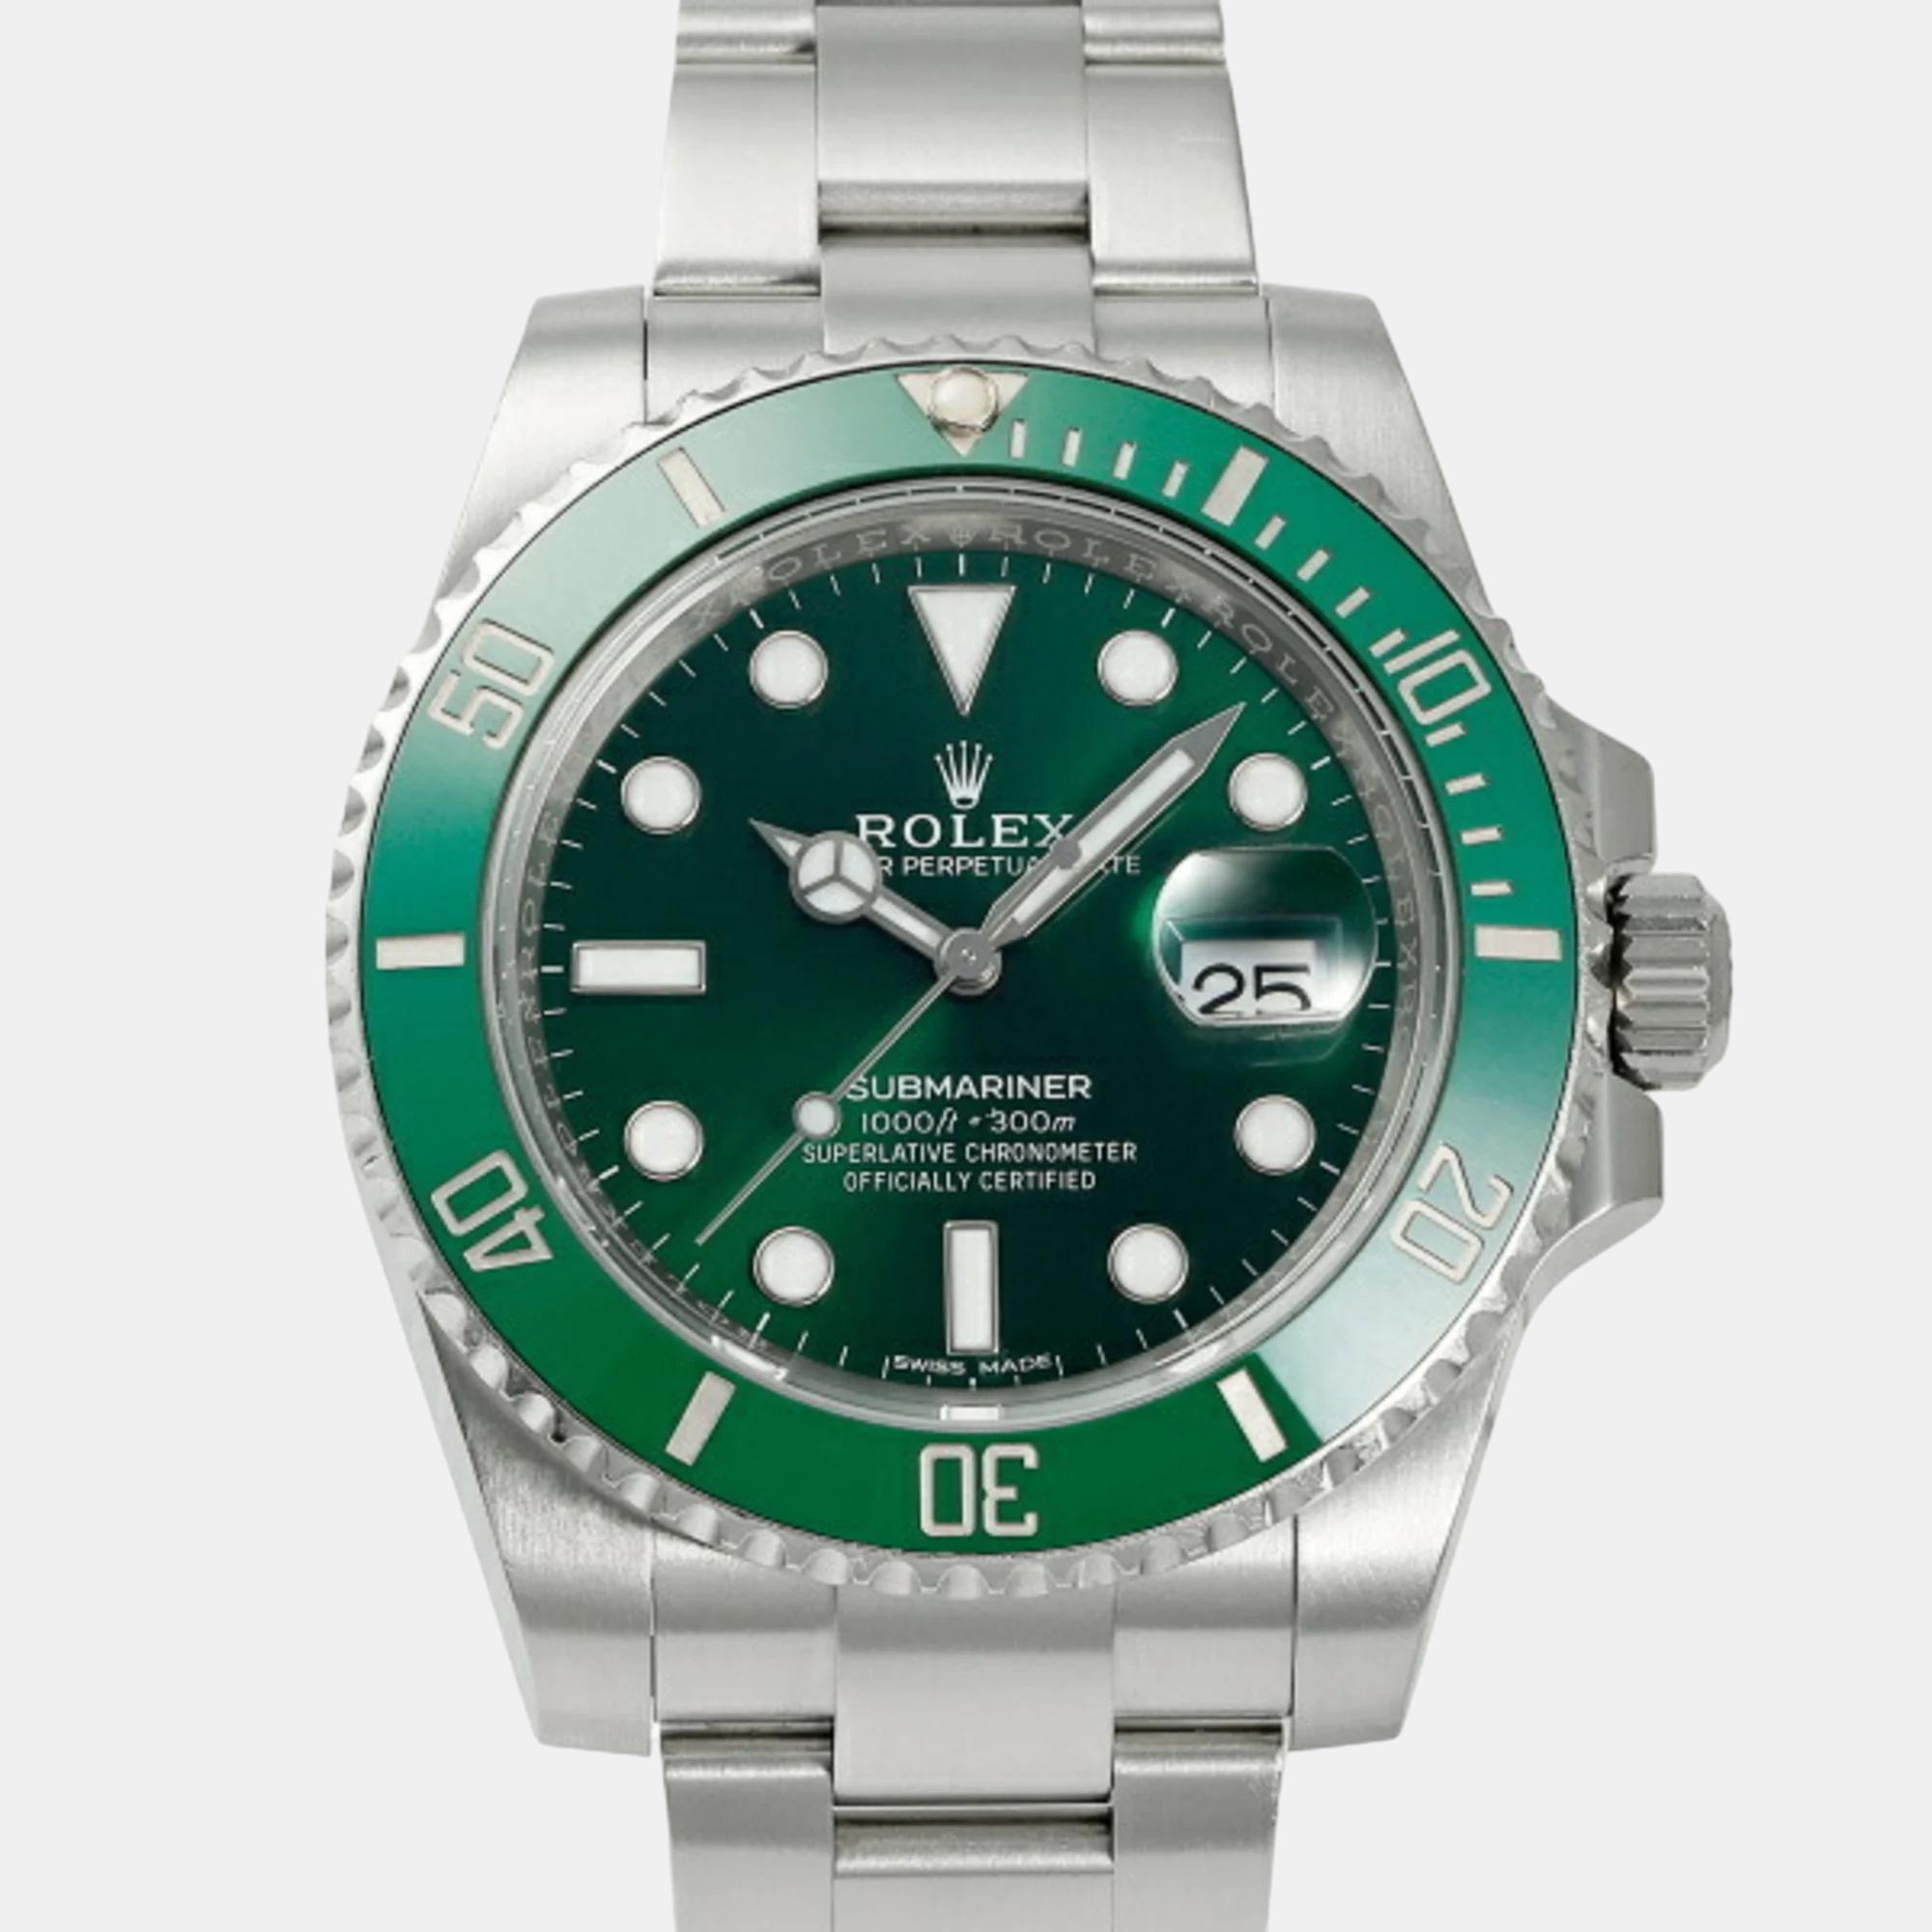 Rolex green stainless steel submariner date 116610lv men's watch 40 mm